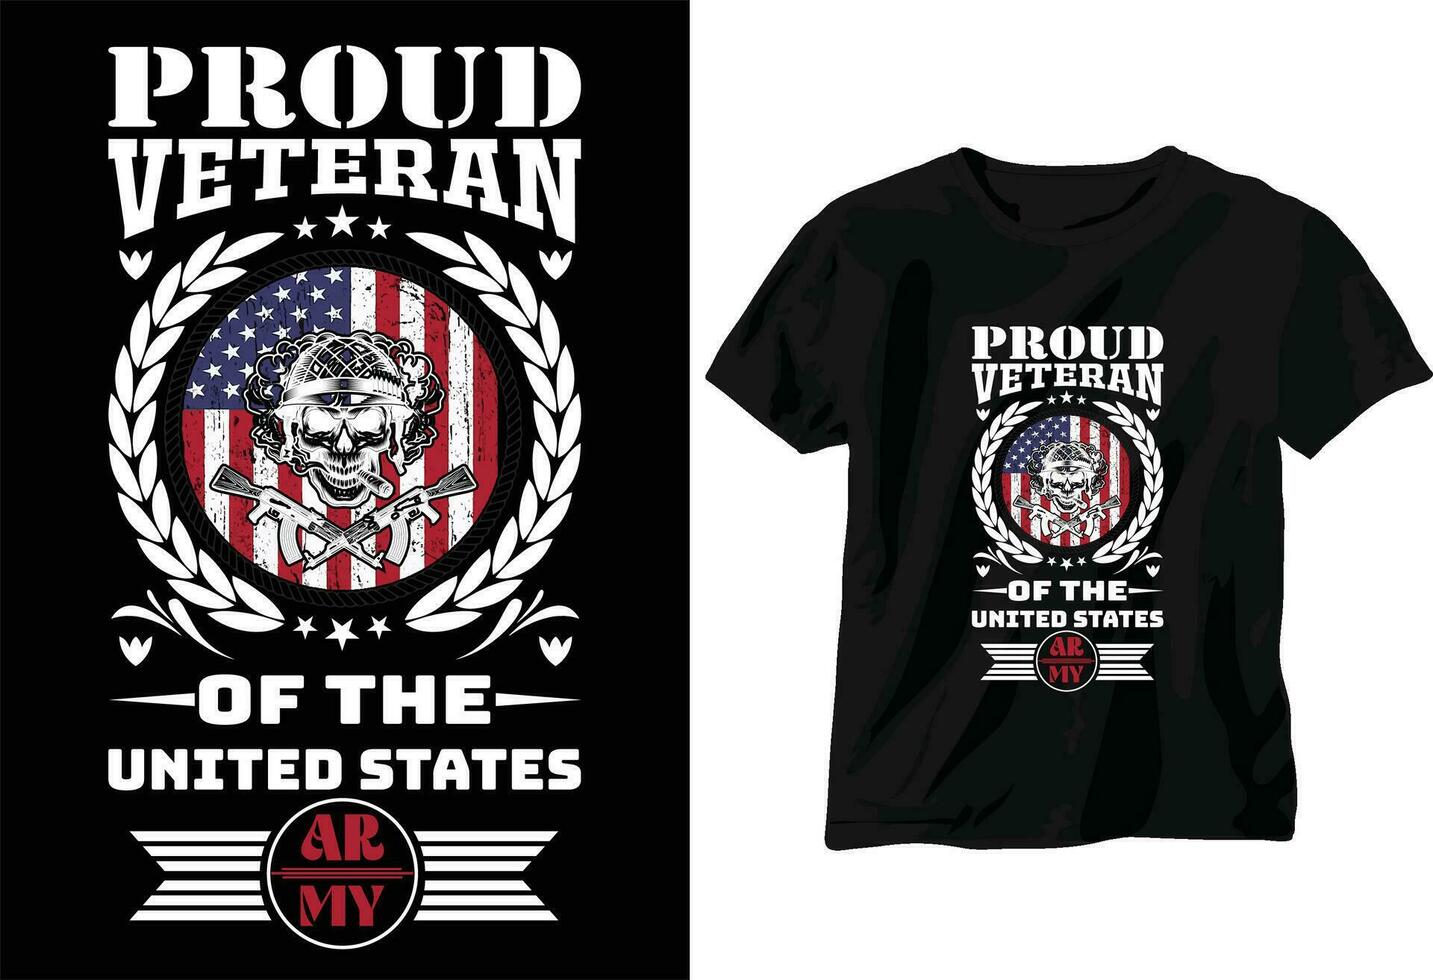 Verenigde staten leger, ons leger t-shirt ontwerp vector